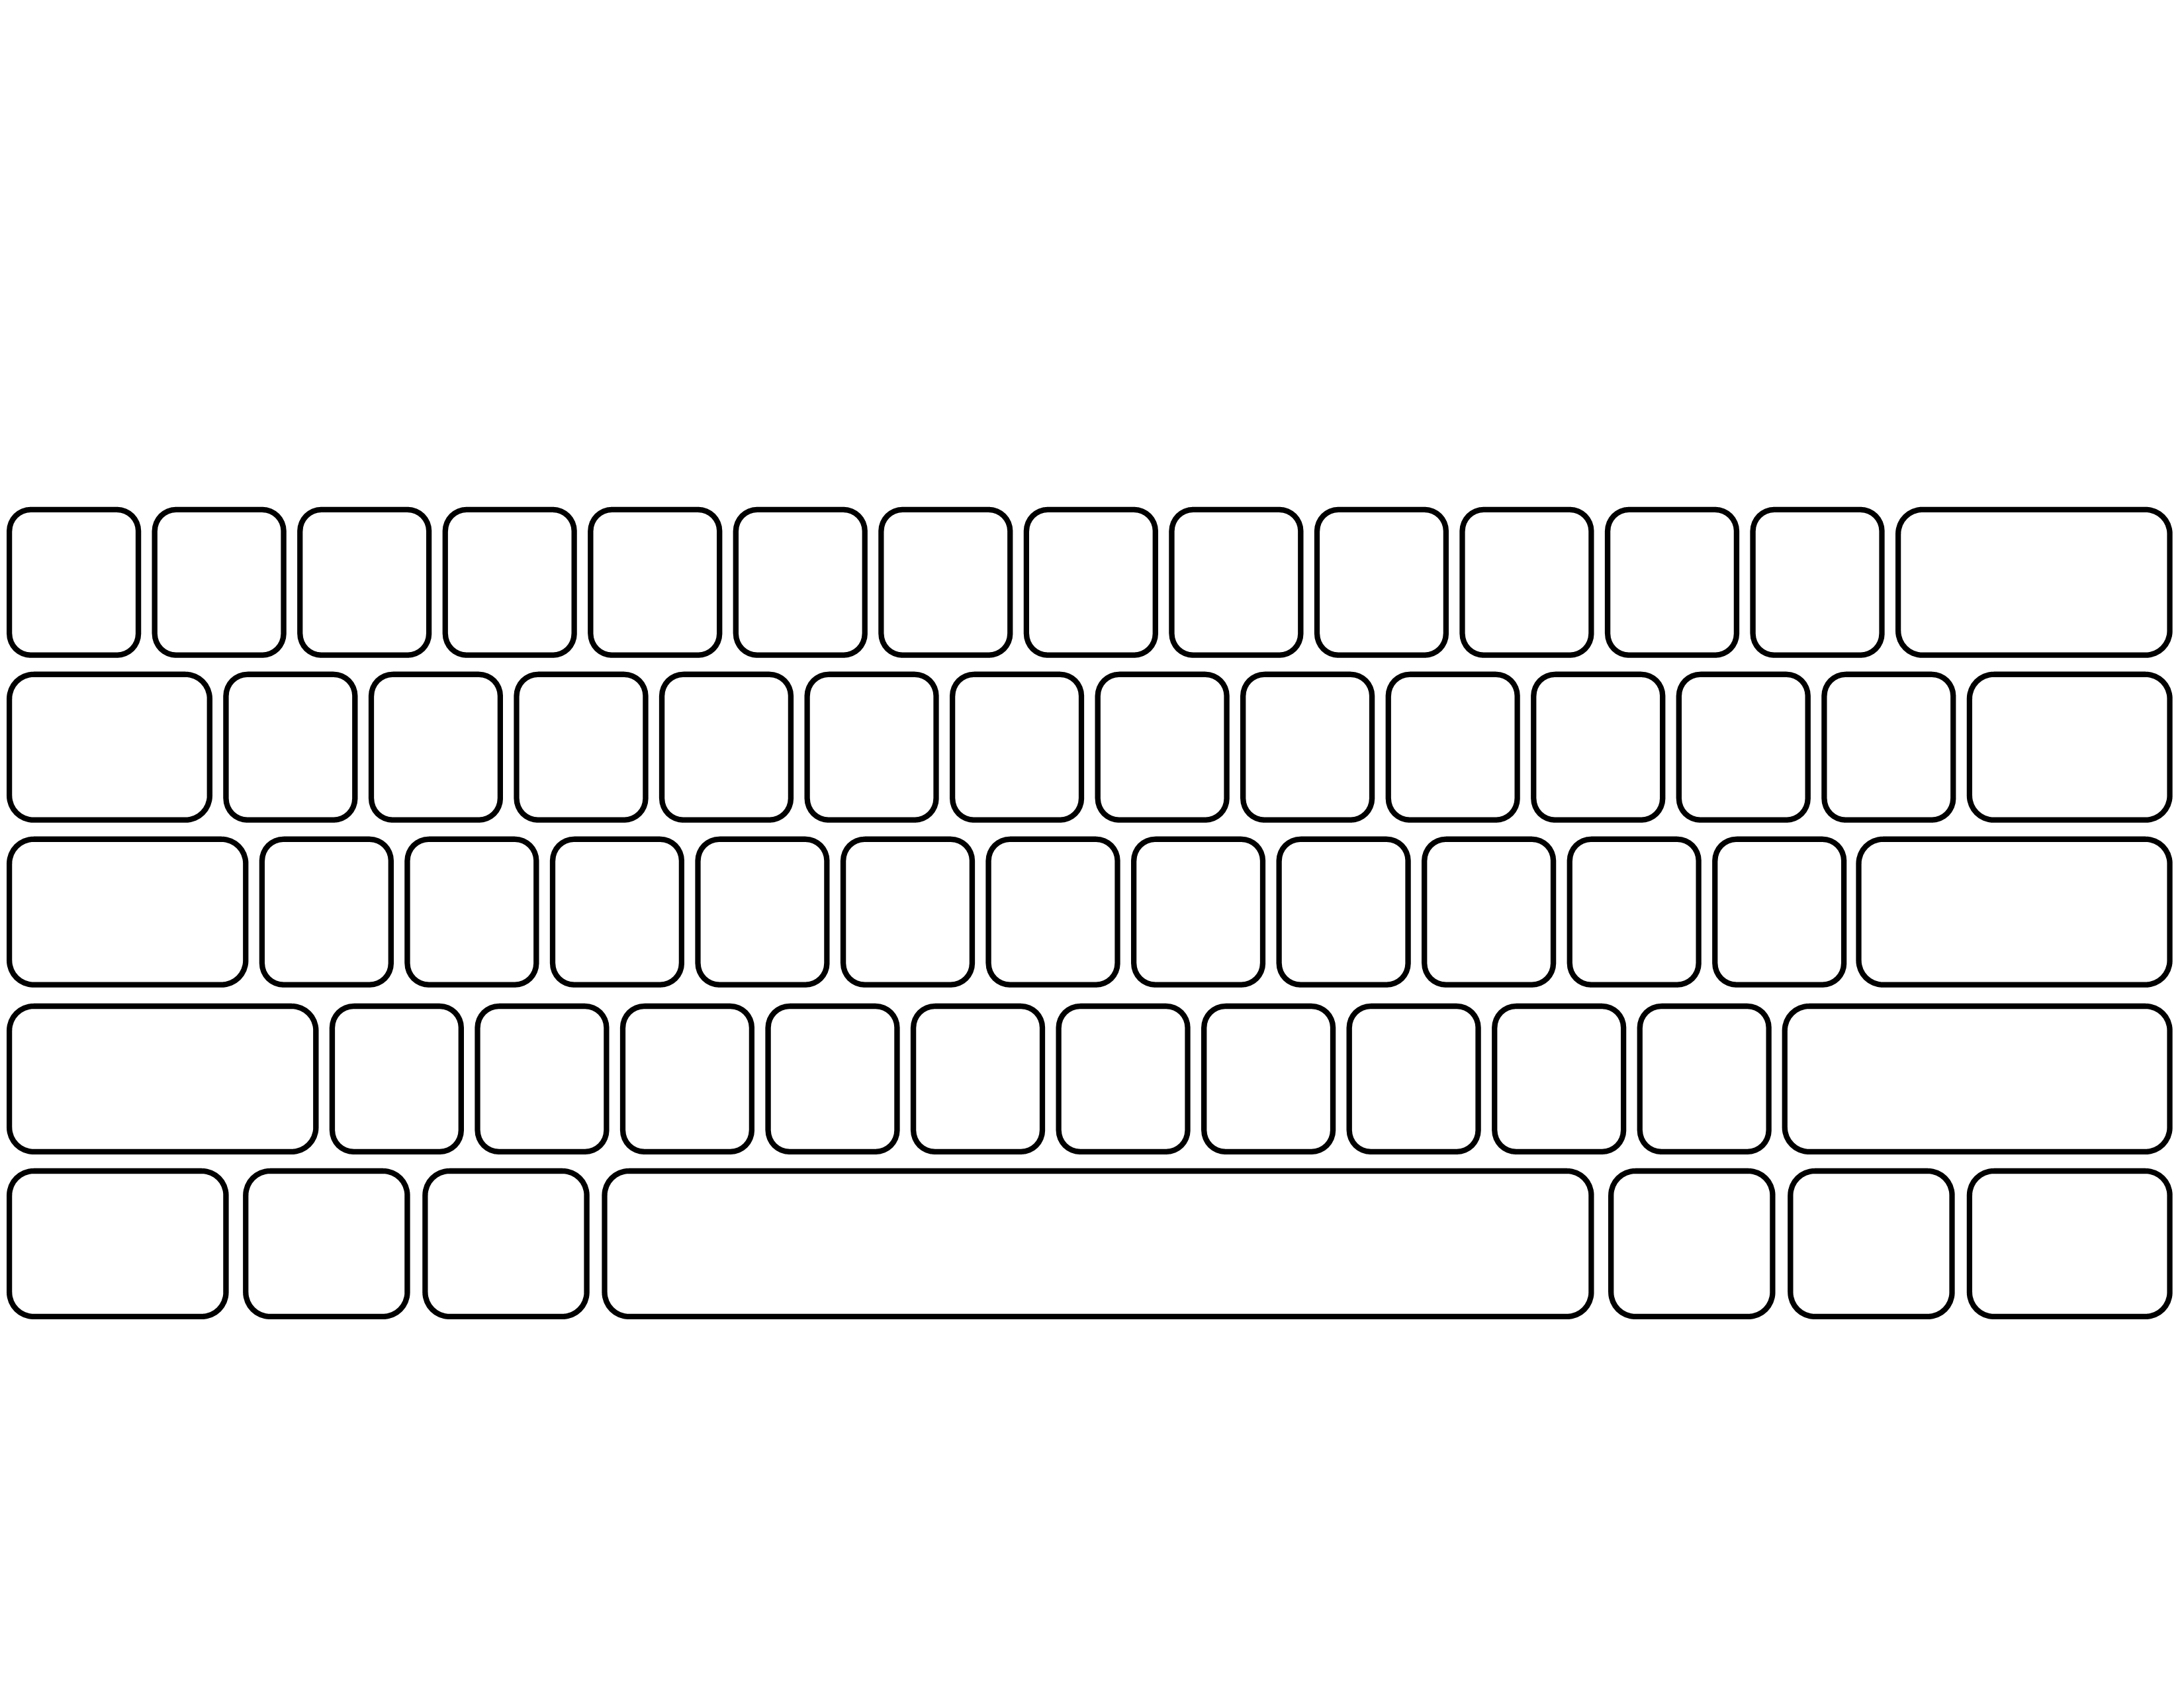 Blank Keyboard Template | Ginger&amp;#039;s $1 Tech Shop | Computer Keyboard | Blank Keyboard Worksheet Printable